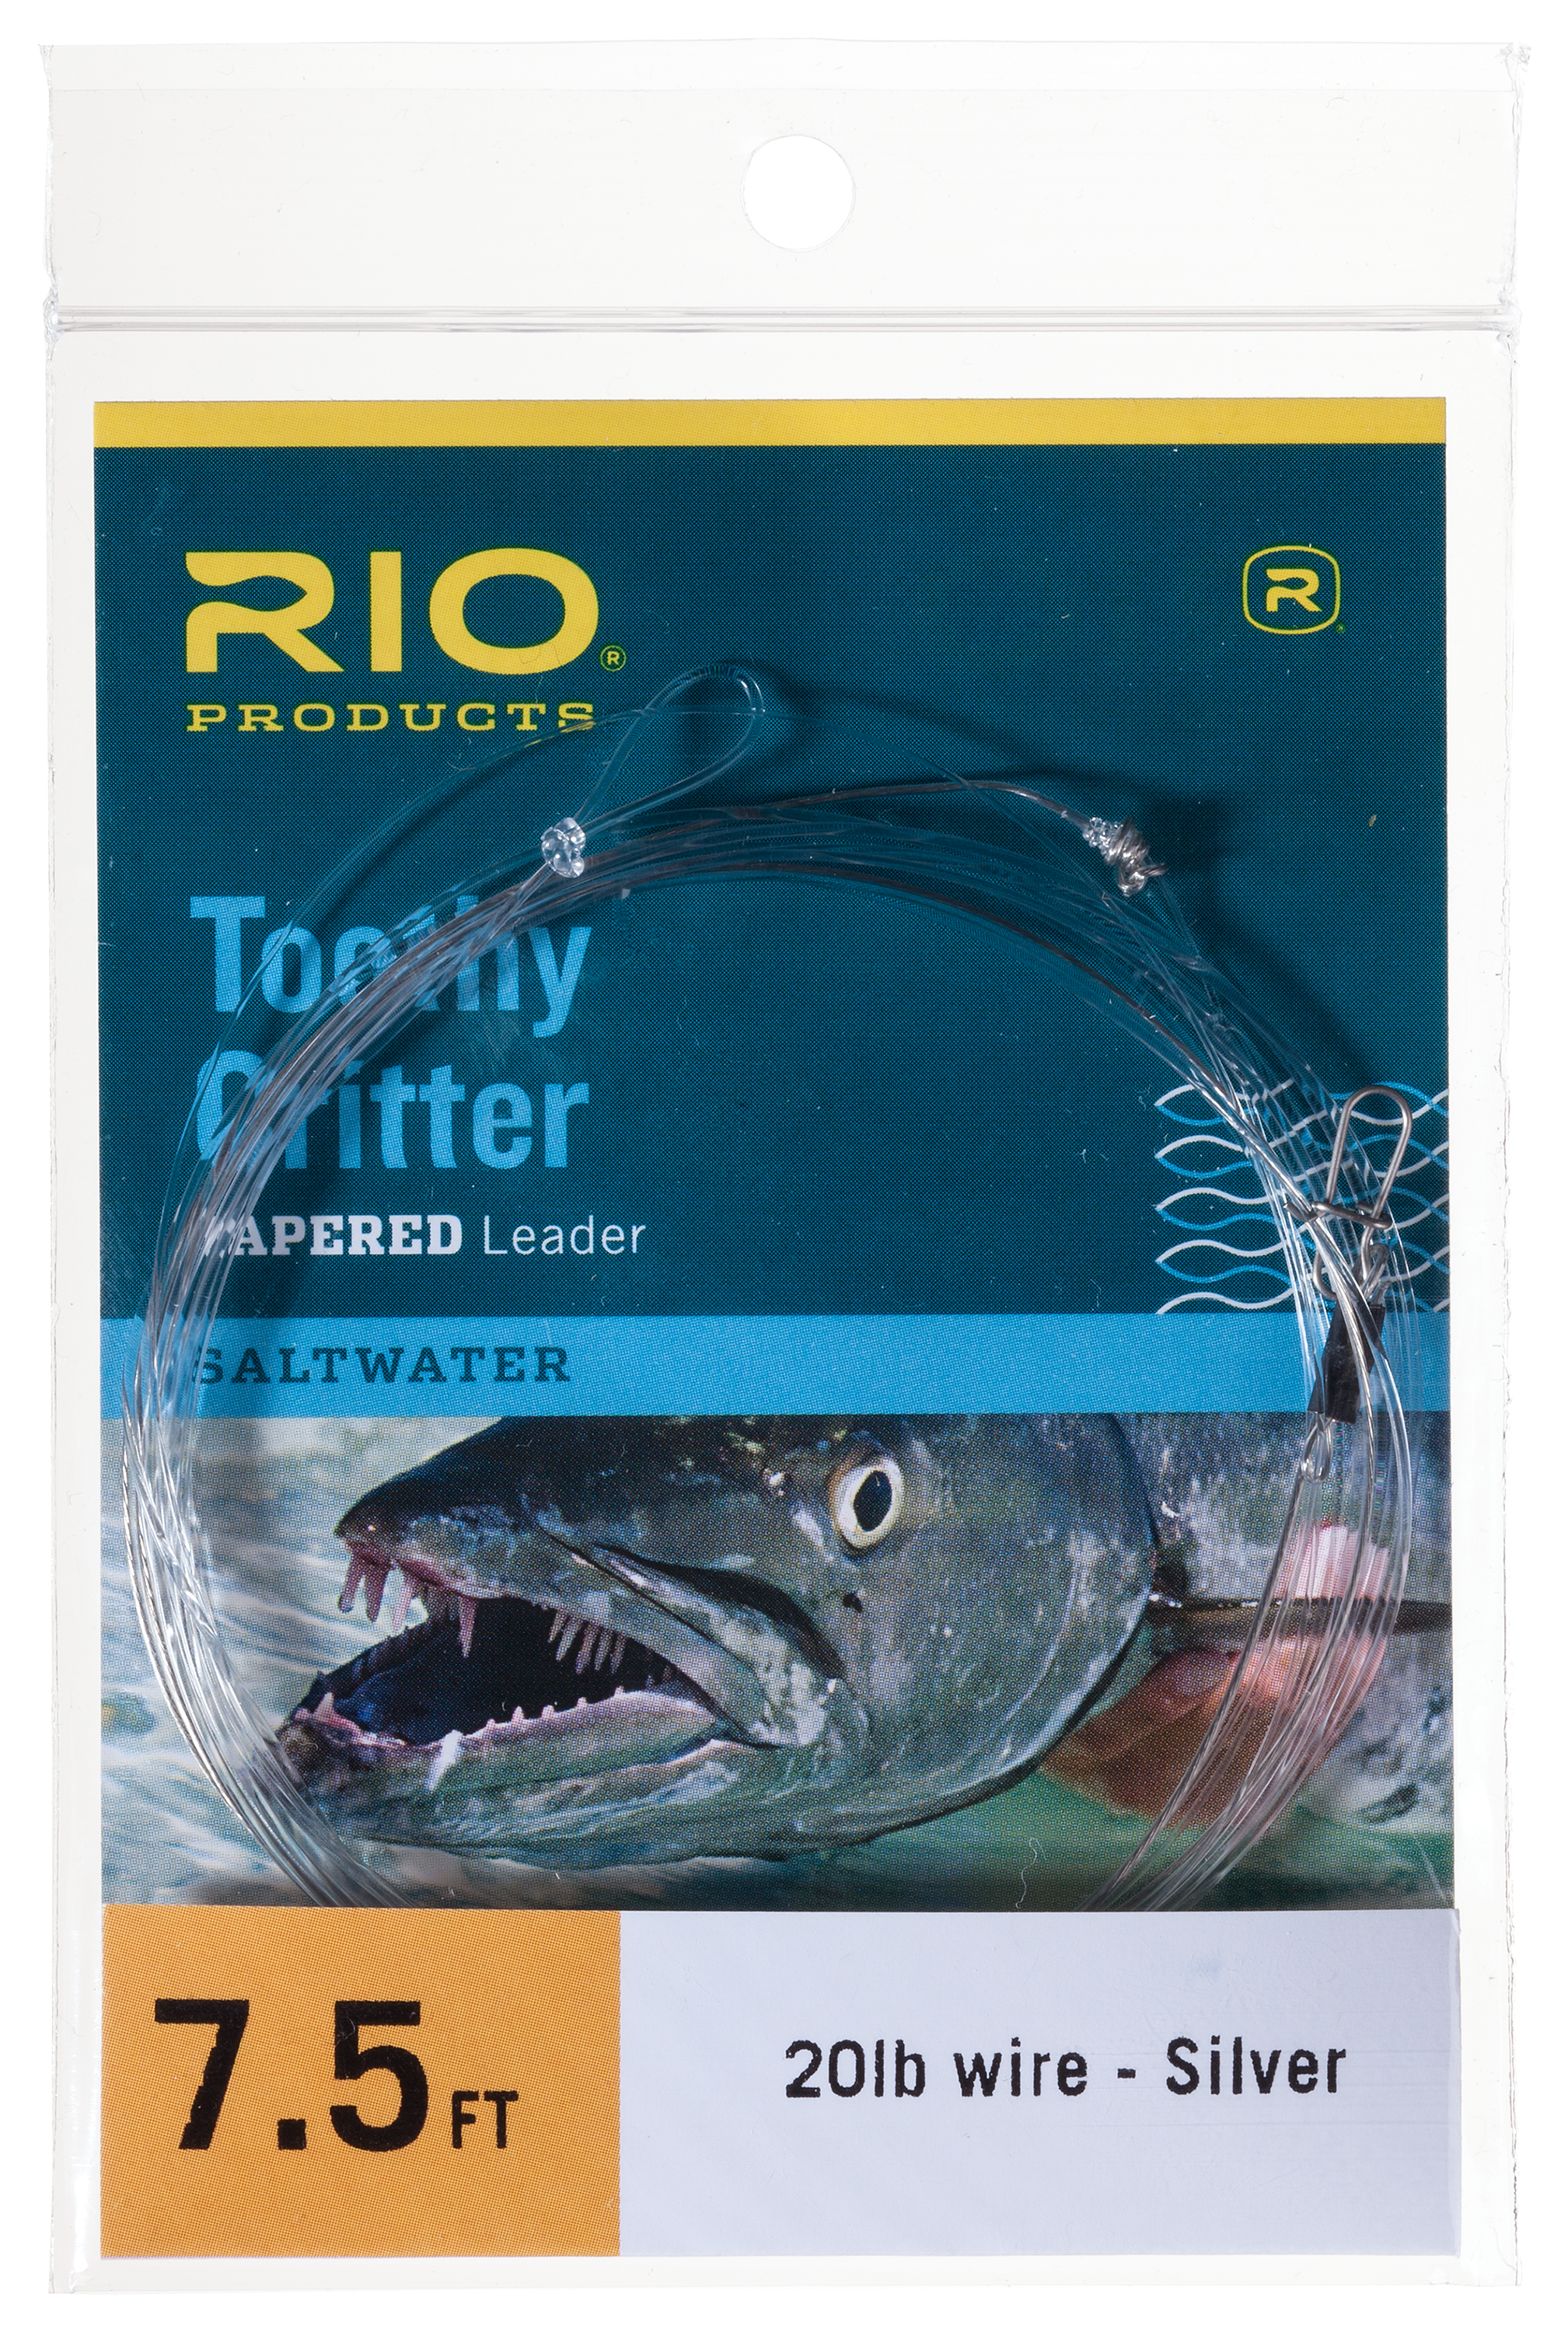 Rio Toothy Critter Leader 20lb / Silver